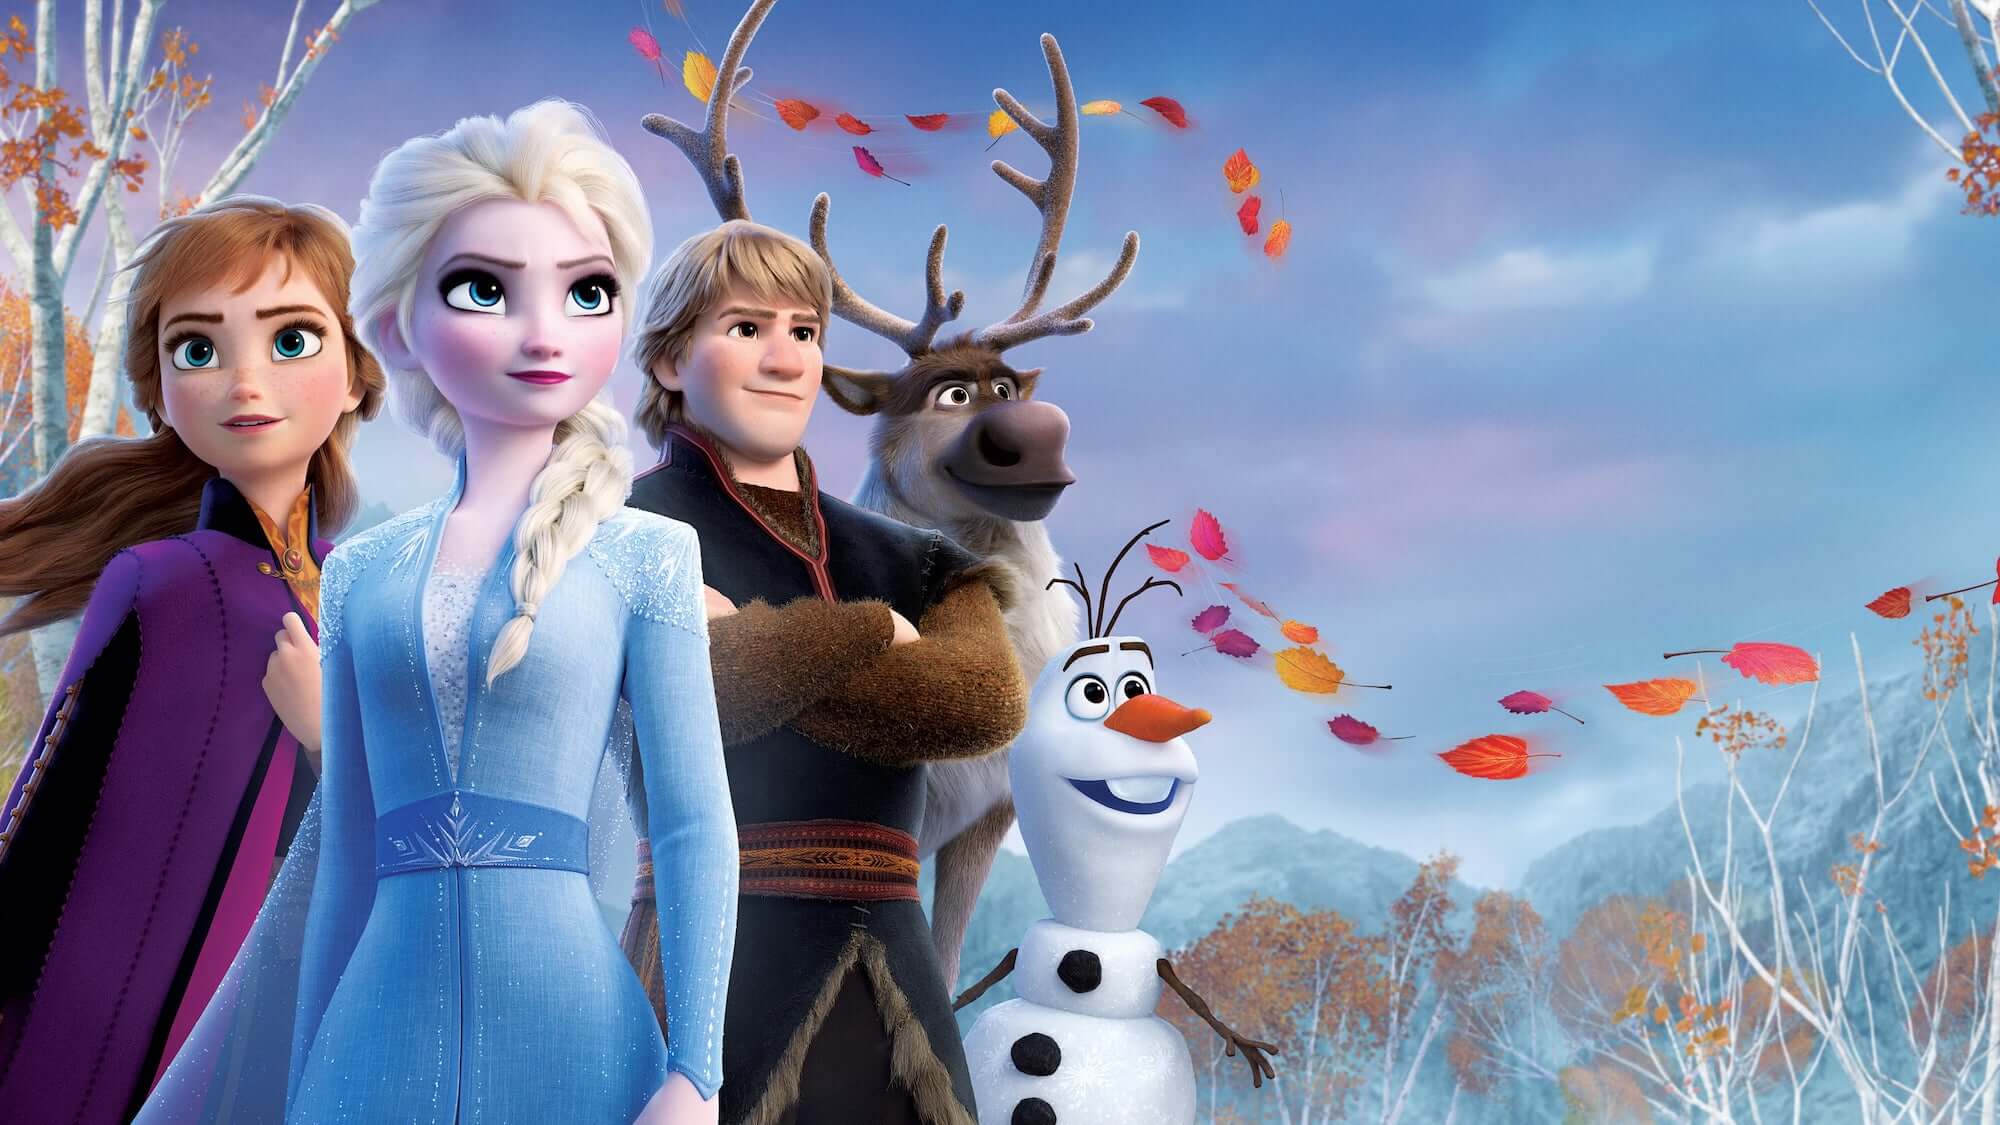 Frozen 2 (2019) Soundtrack | List of Songs